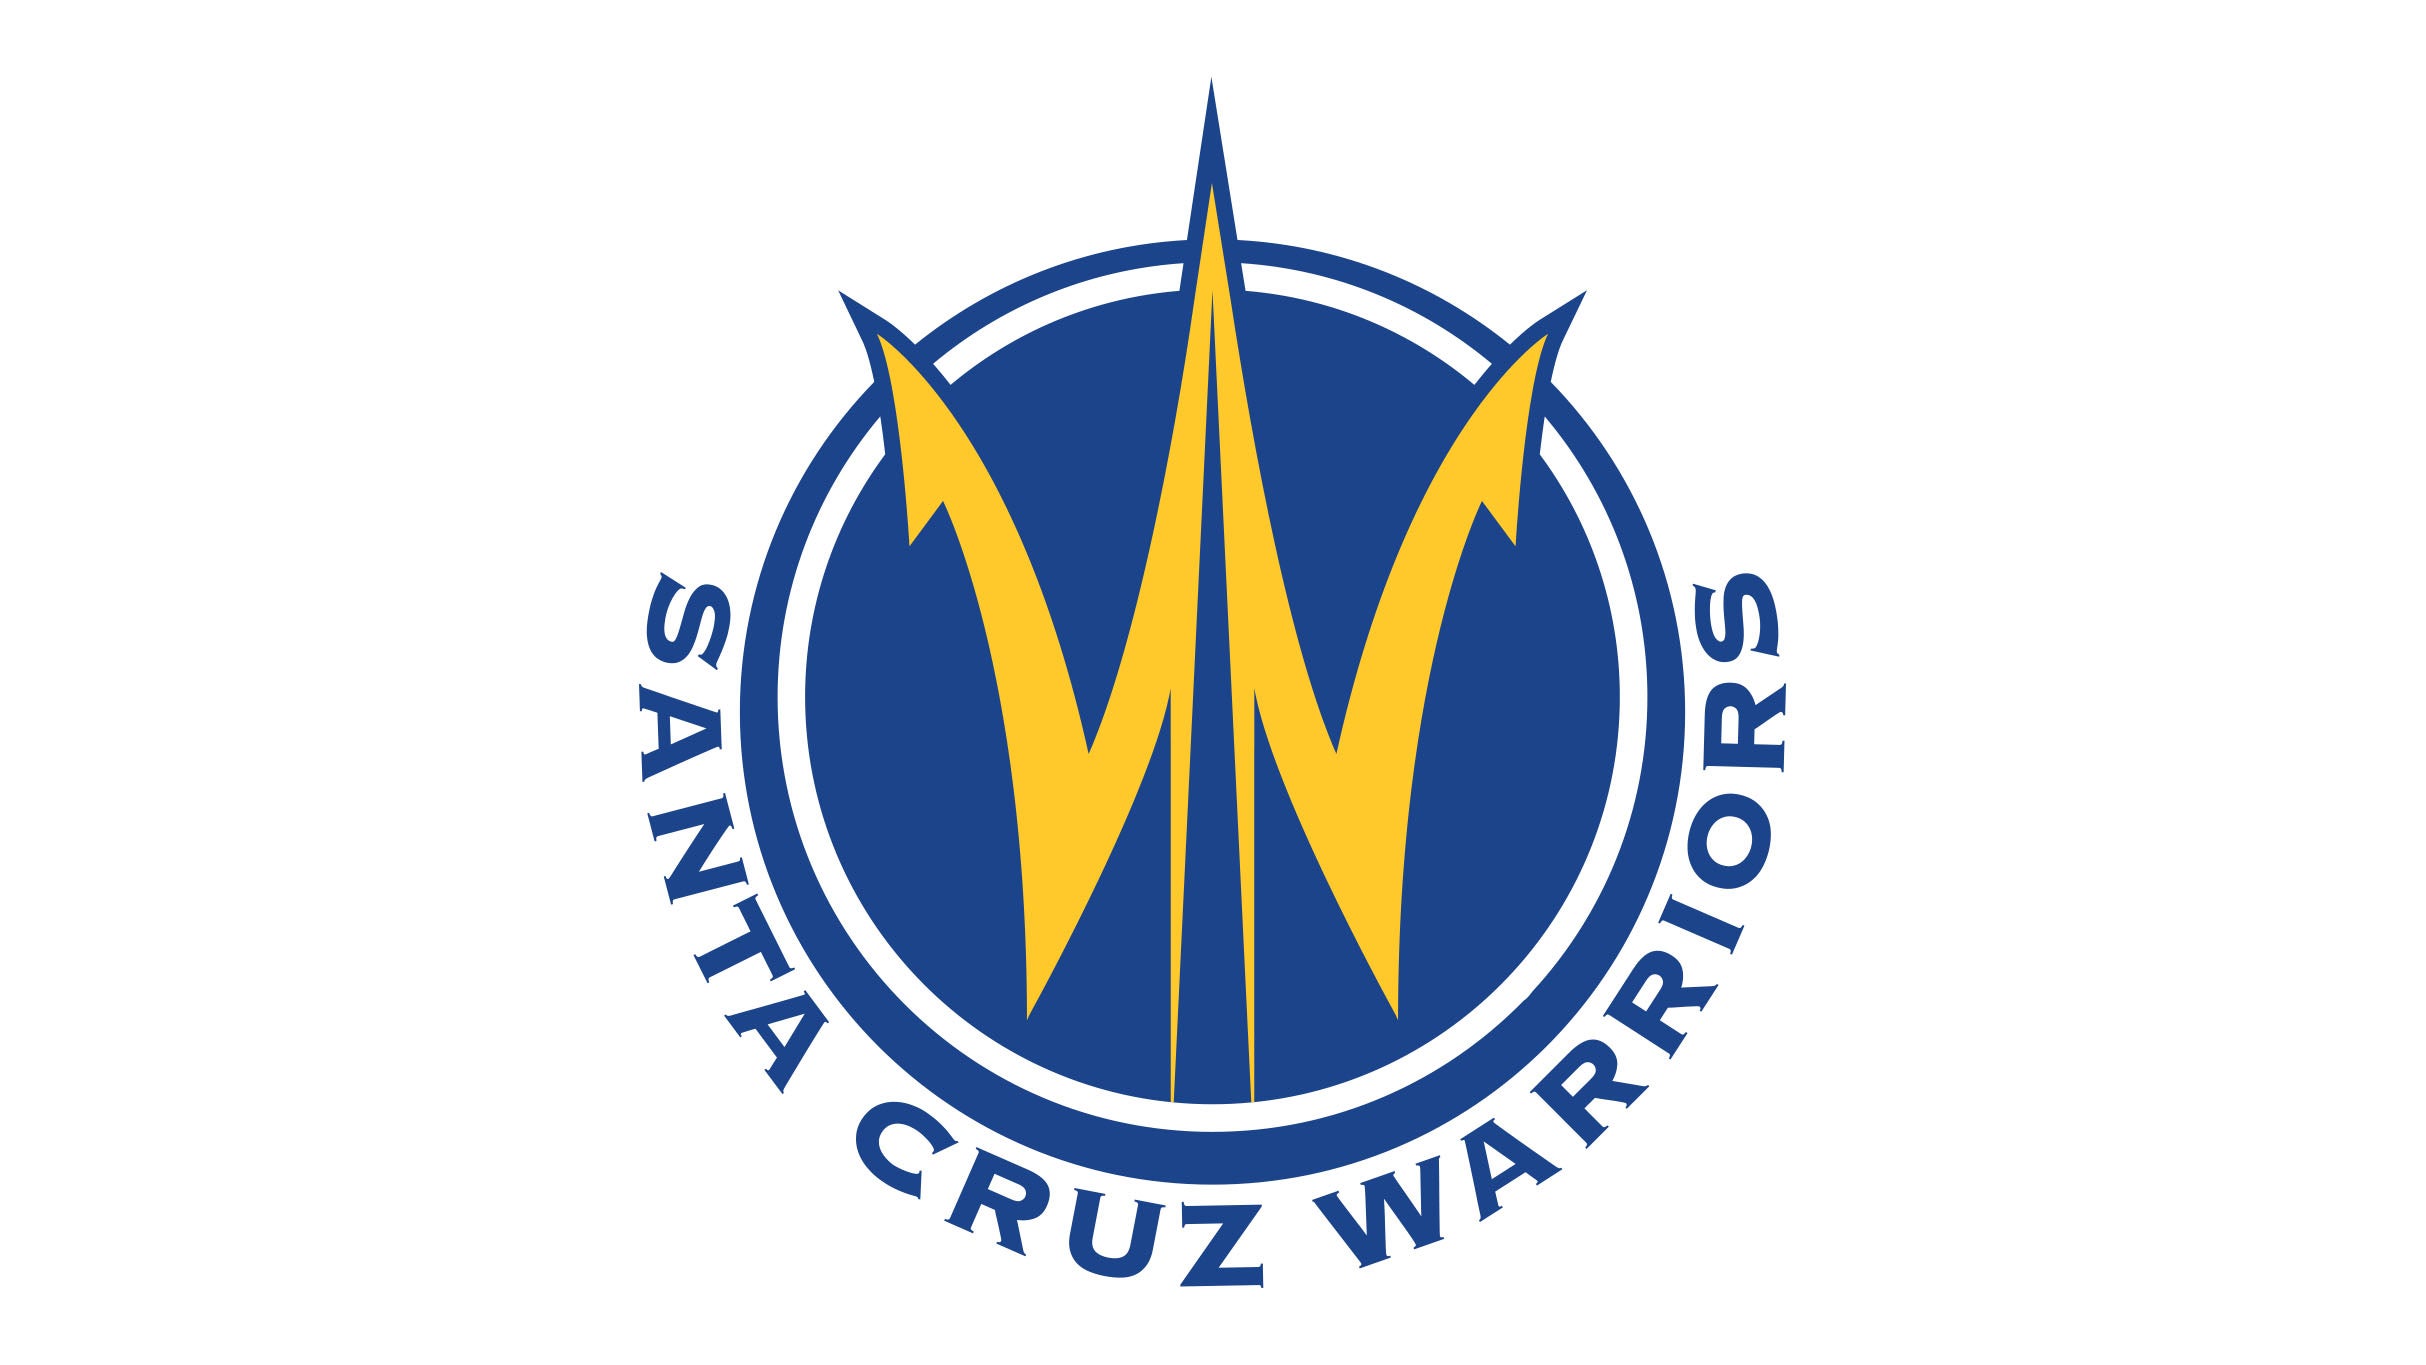 Santa Cruz Warriors vs. Iowa Wolves in Santa Cruz promo photo for Mini Plan Holder presale offer code